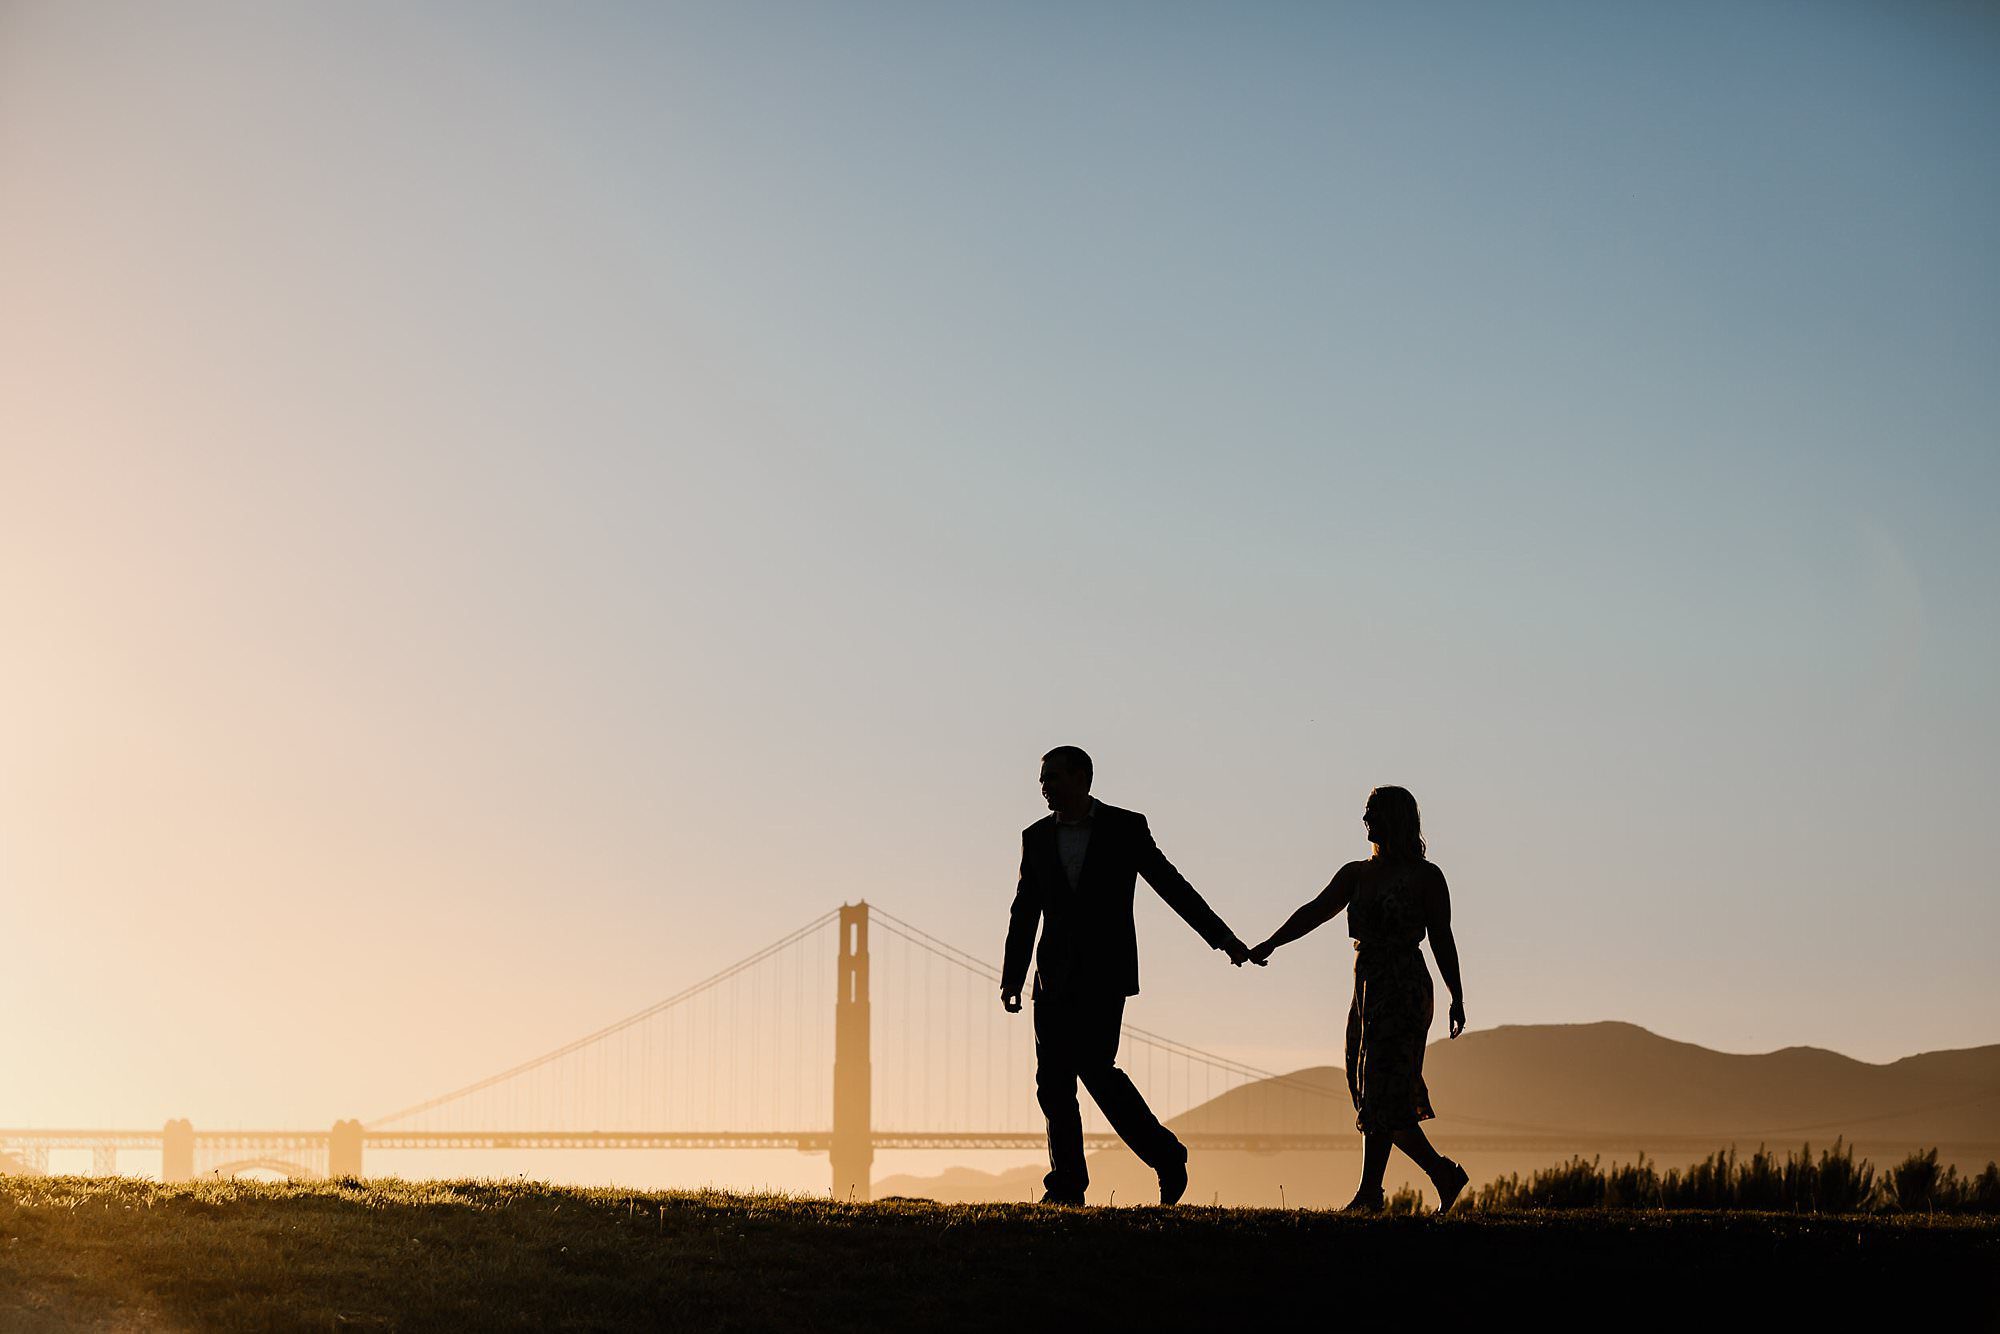 Aubrey leads his fiancé Skylar across a hill overlooking Golden Gate Bridge at sunset